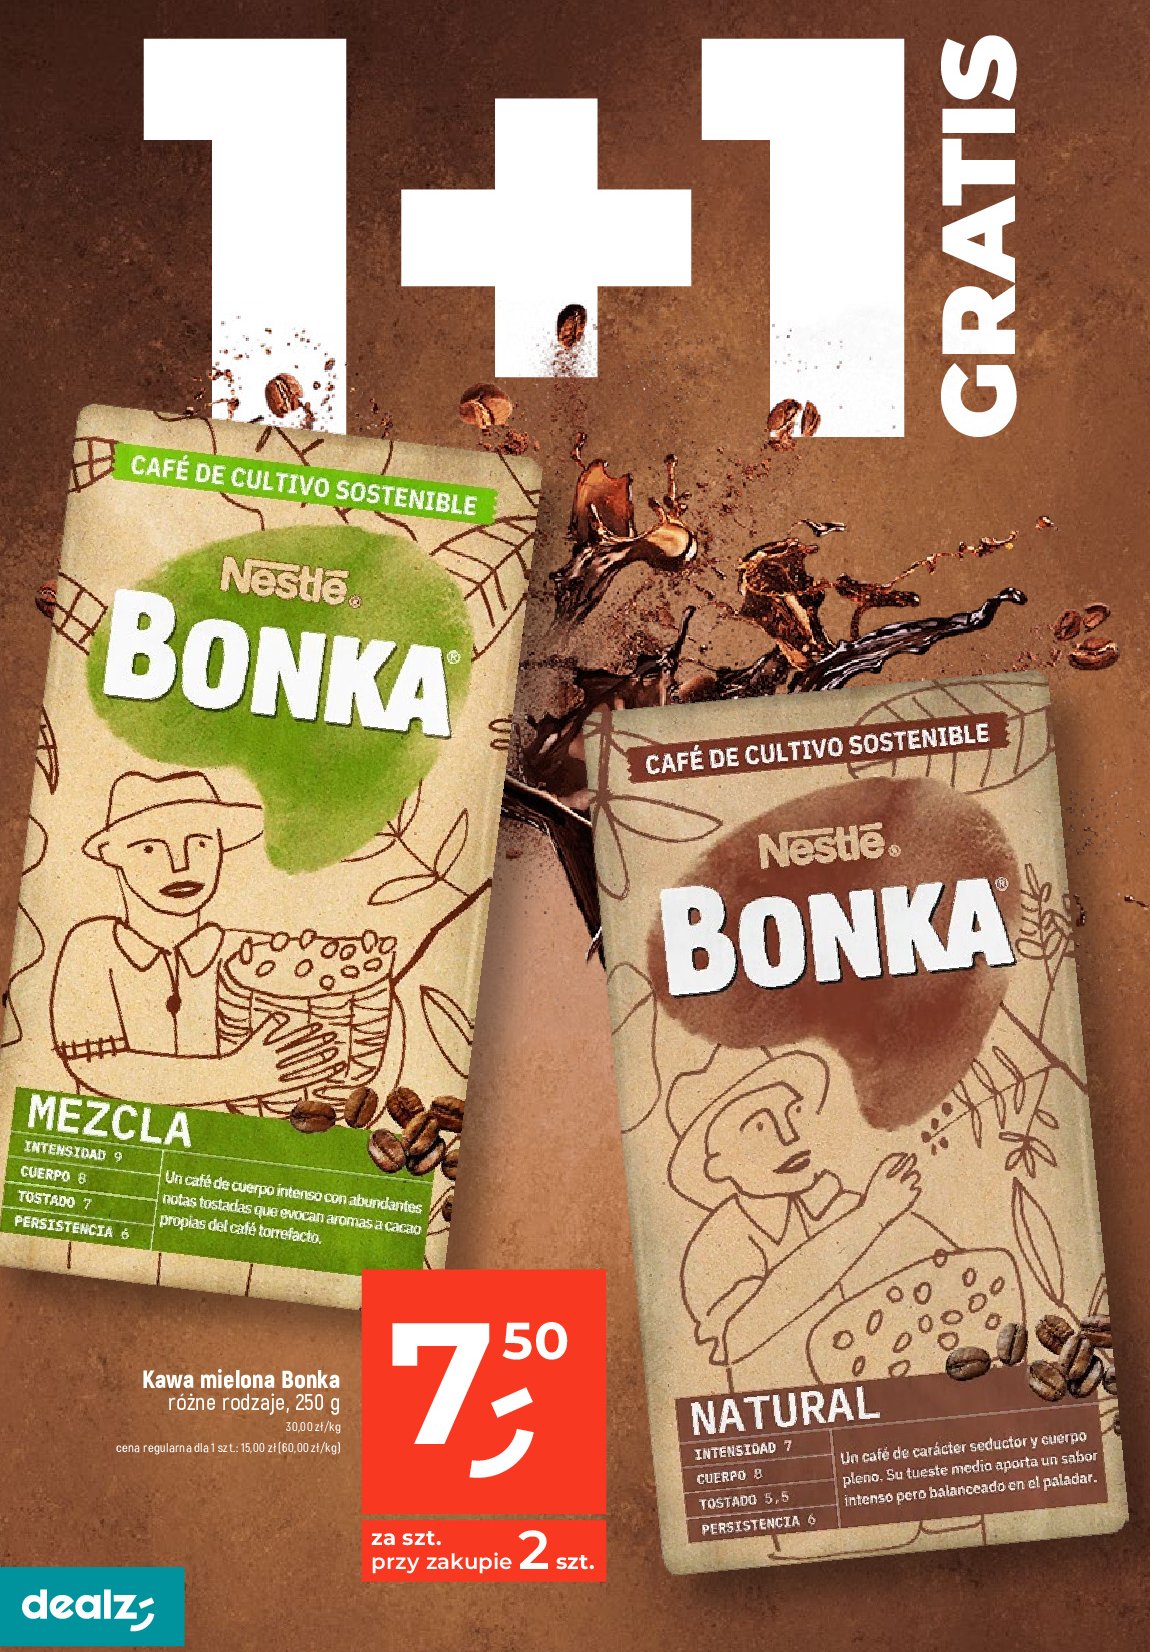 Kawa Bonka mezcla promocja